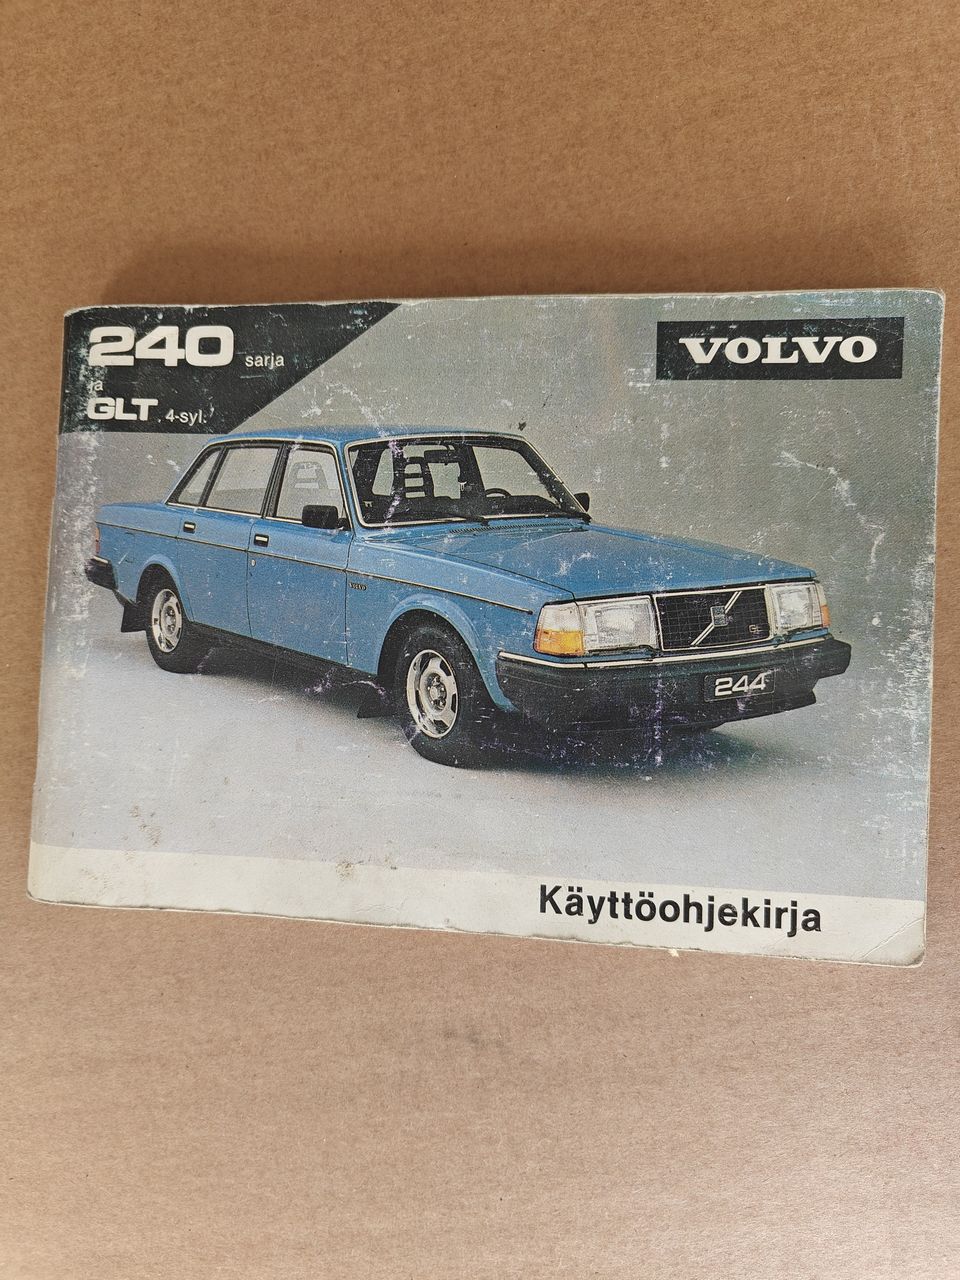 Volvo 240 ja GLT